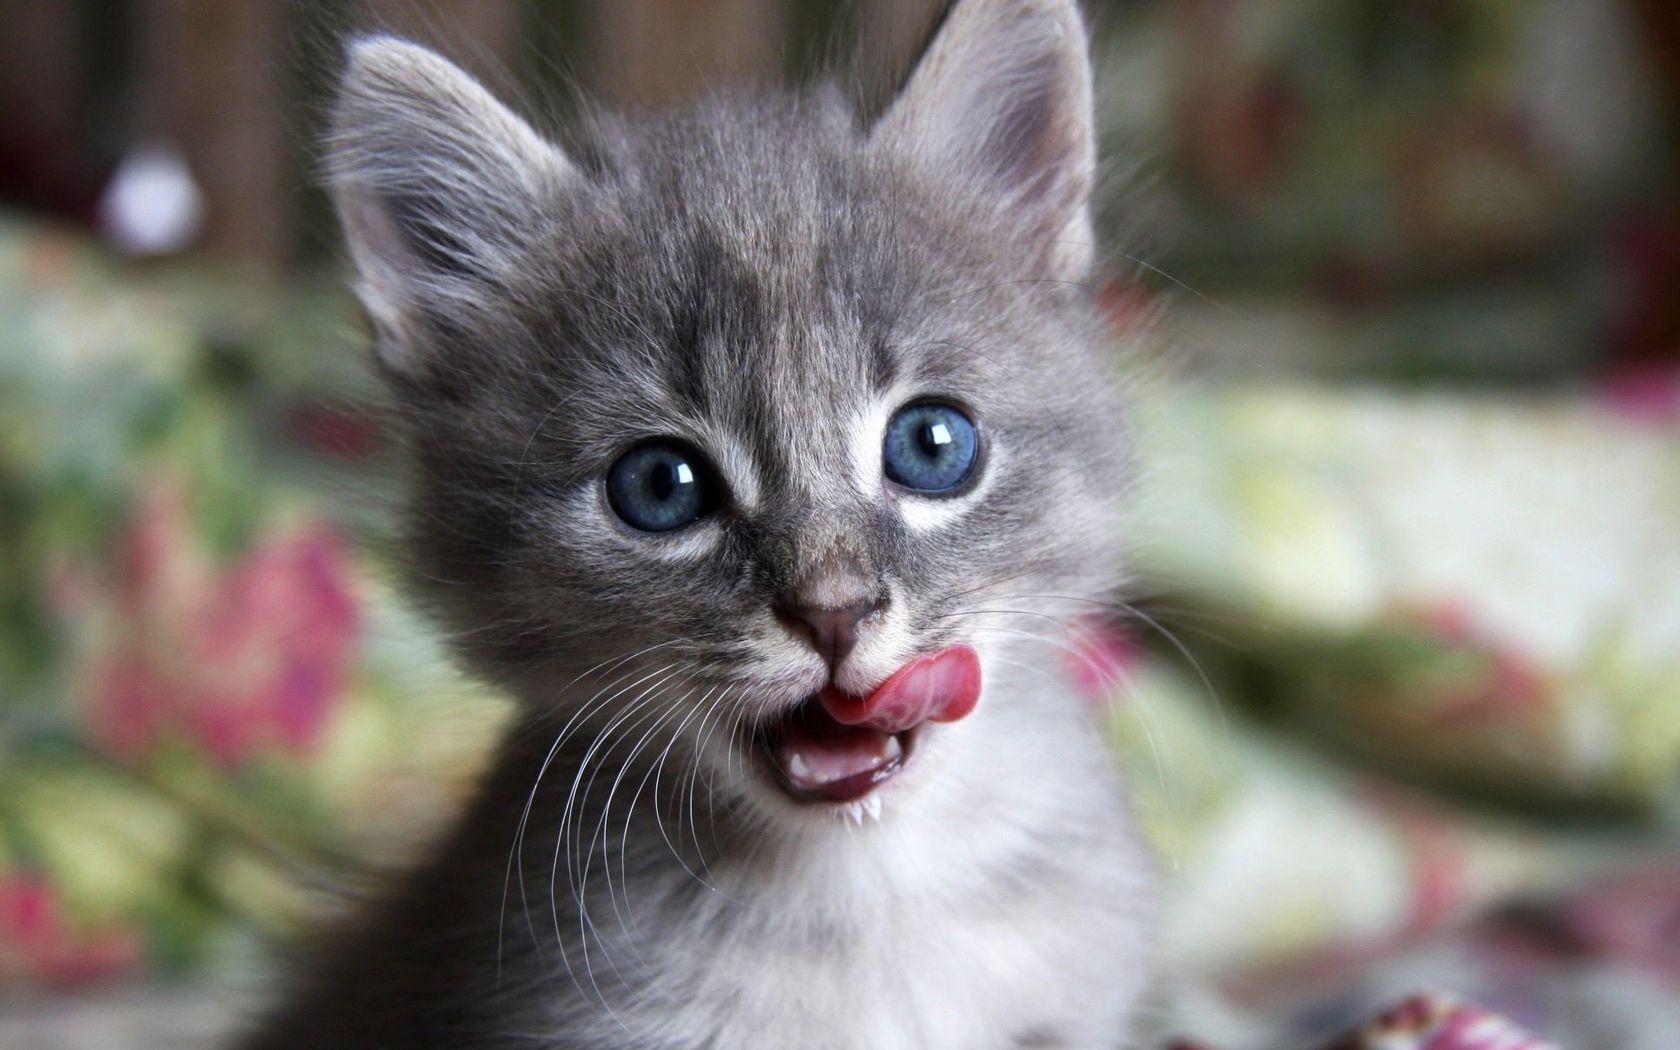 Wallpaper Tags: photography kitty blue eyes grey kitten sweet cute adorable